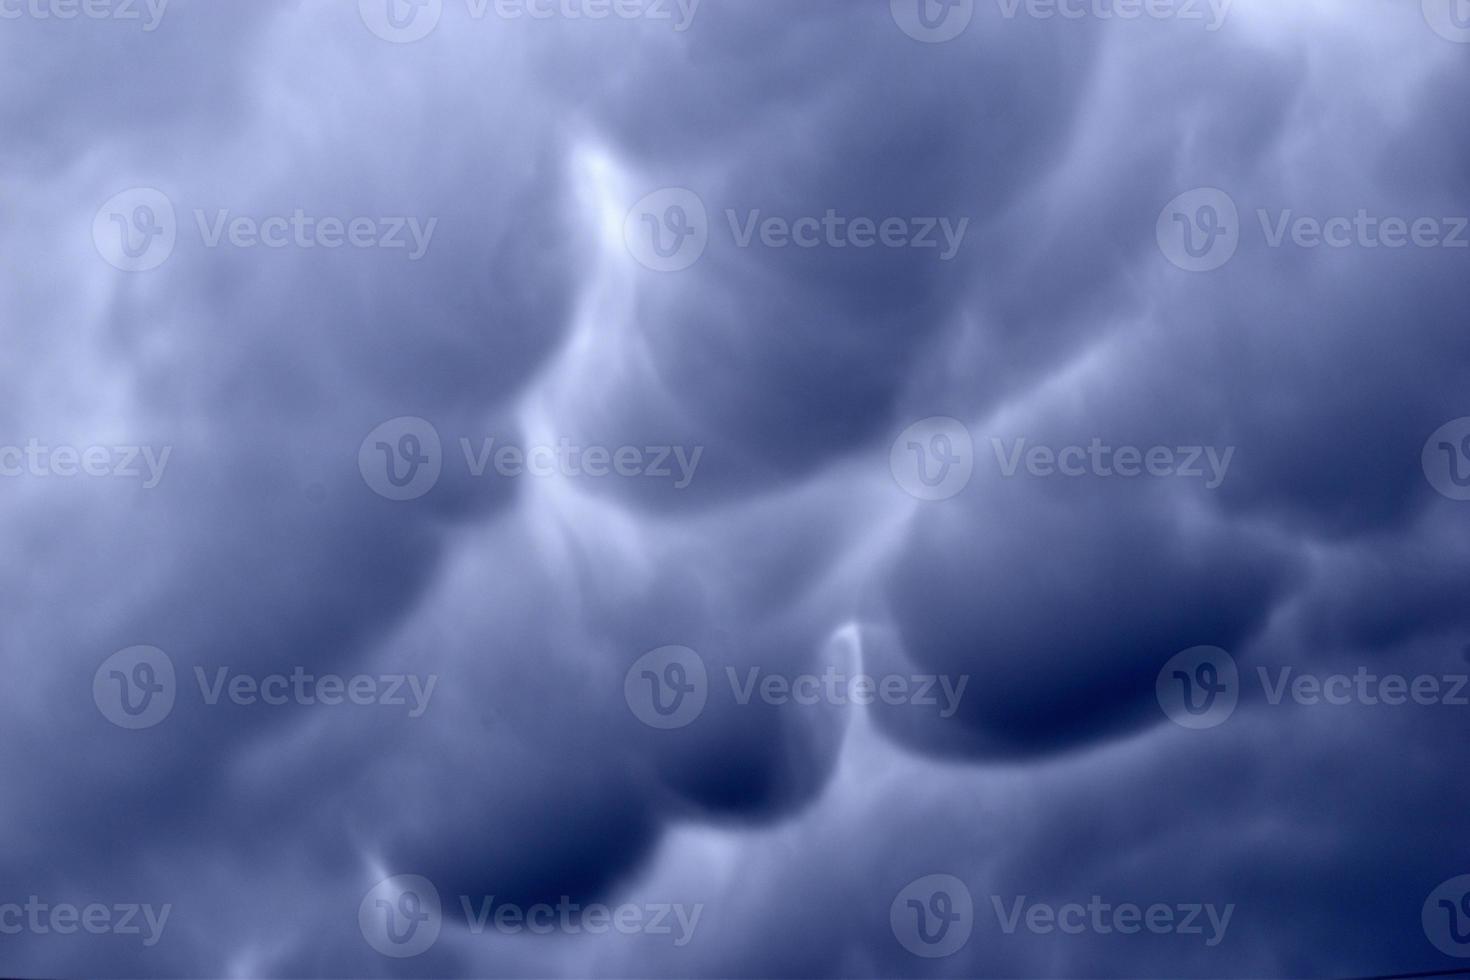 zwaar onweer blauwe wolken mammatuswolk foto